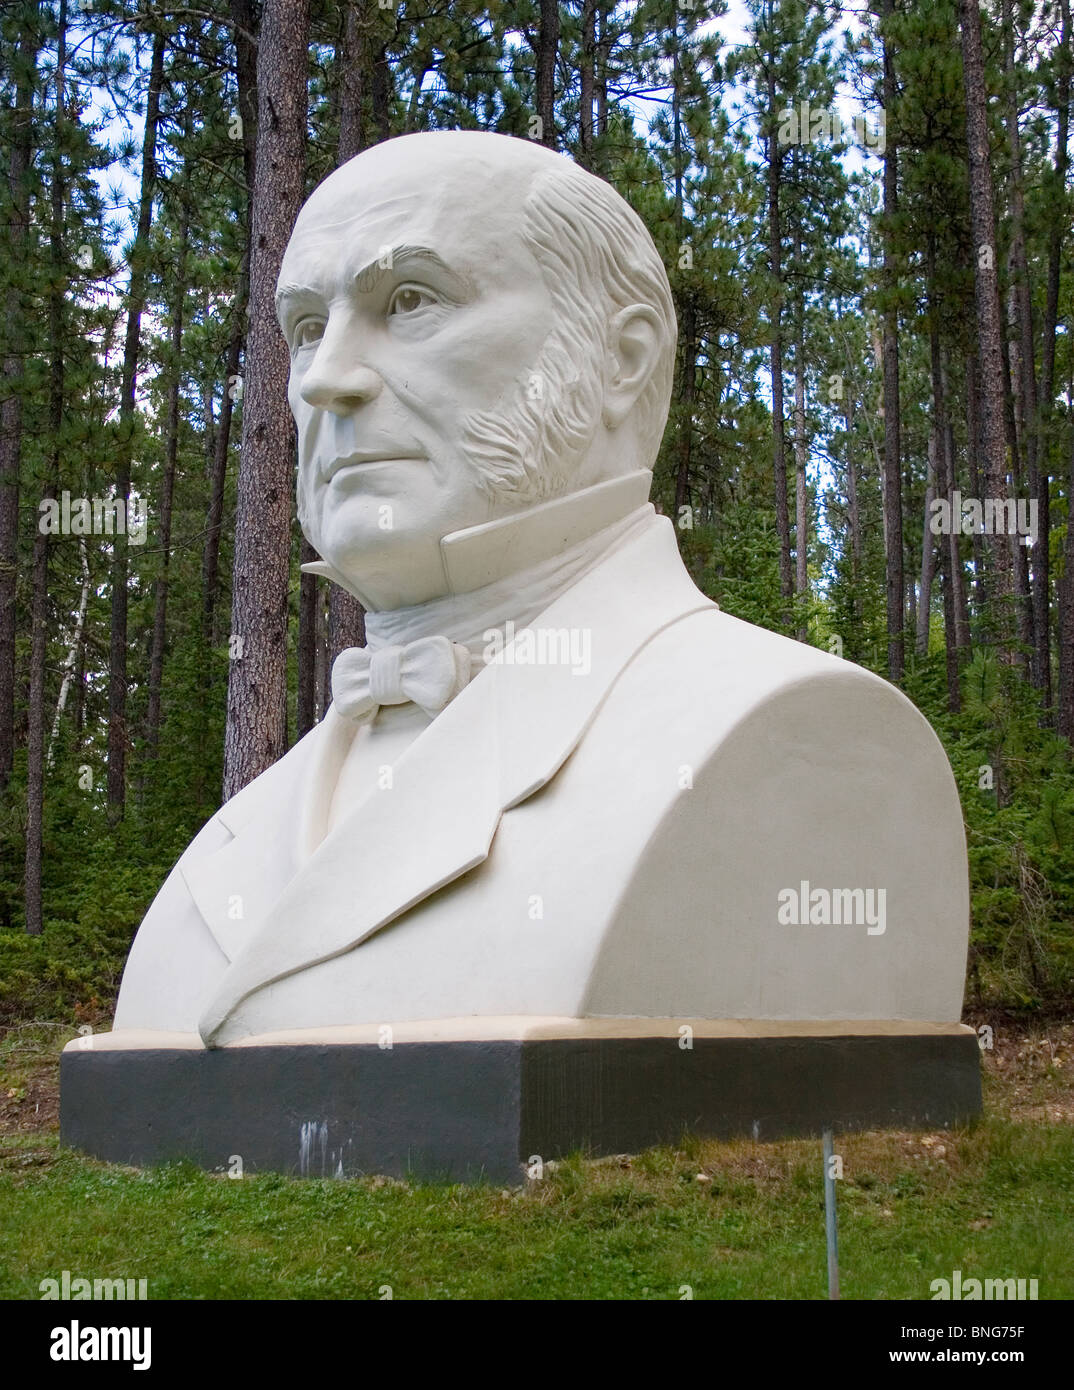 John Quincy Adams bust by sculptor David Adickes at Presidents Park in Lead South Dakota Stock Photo